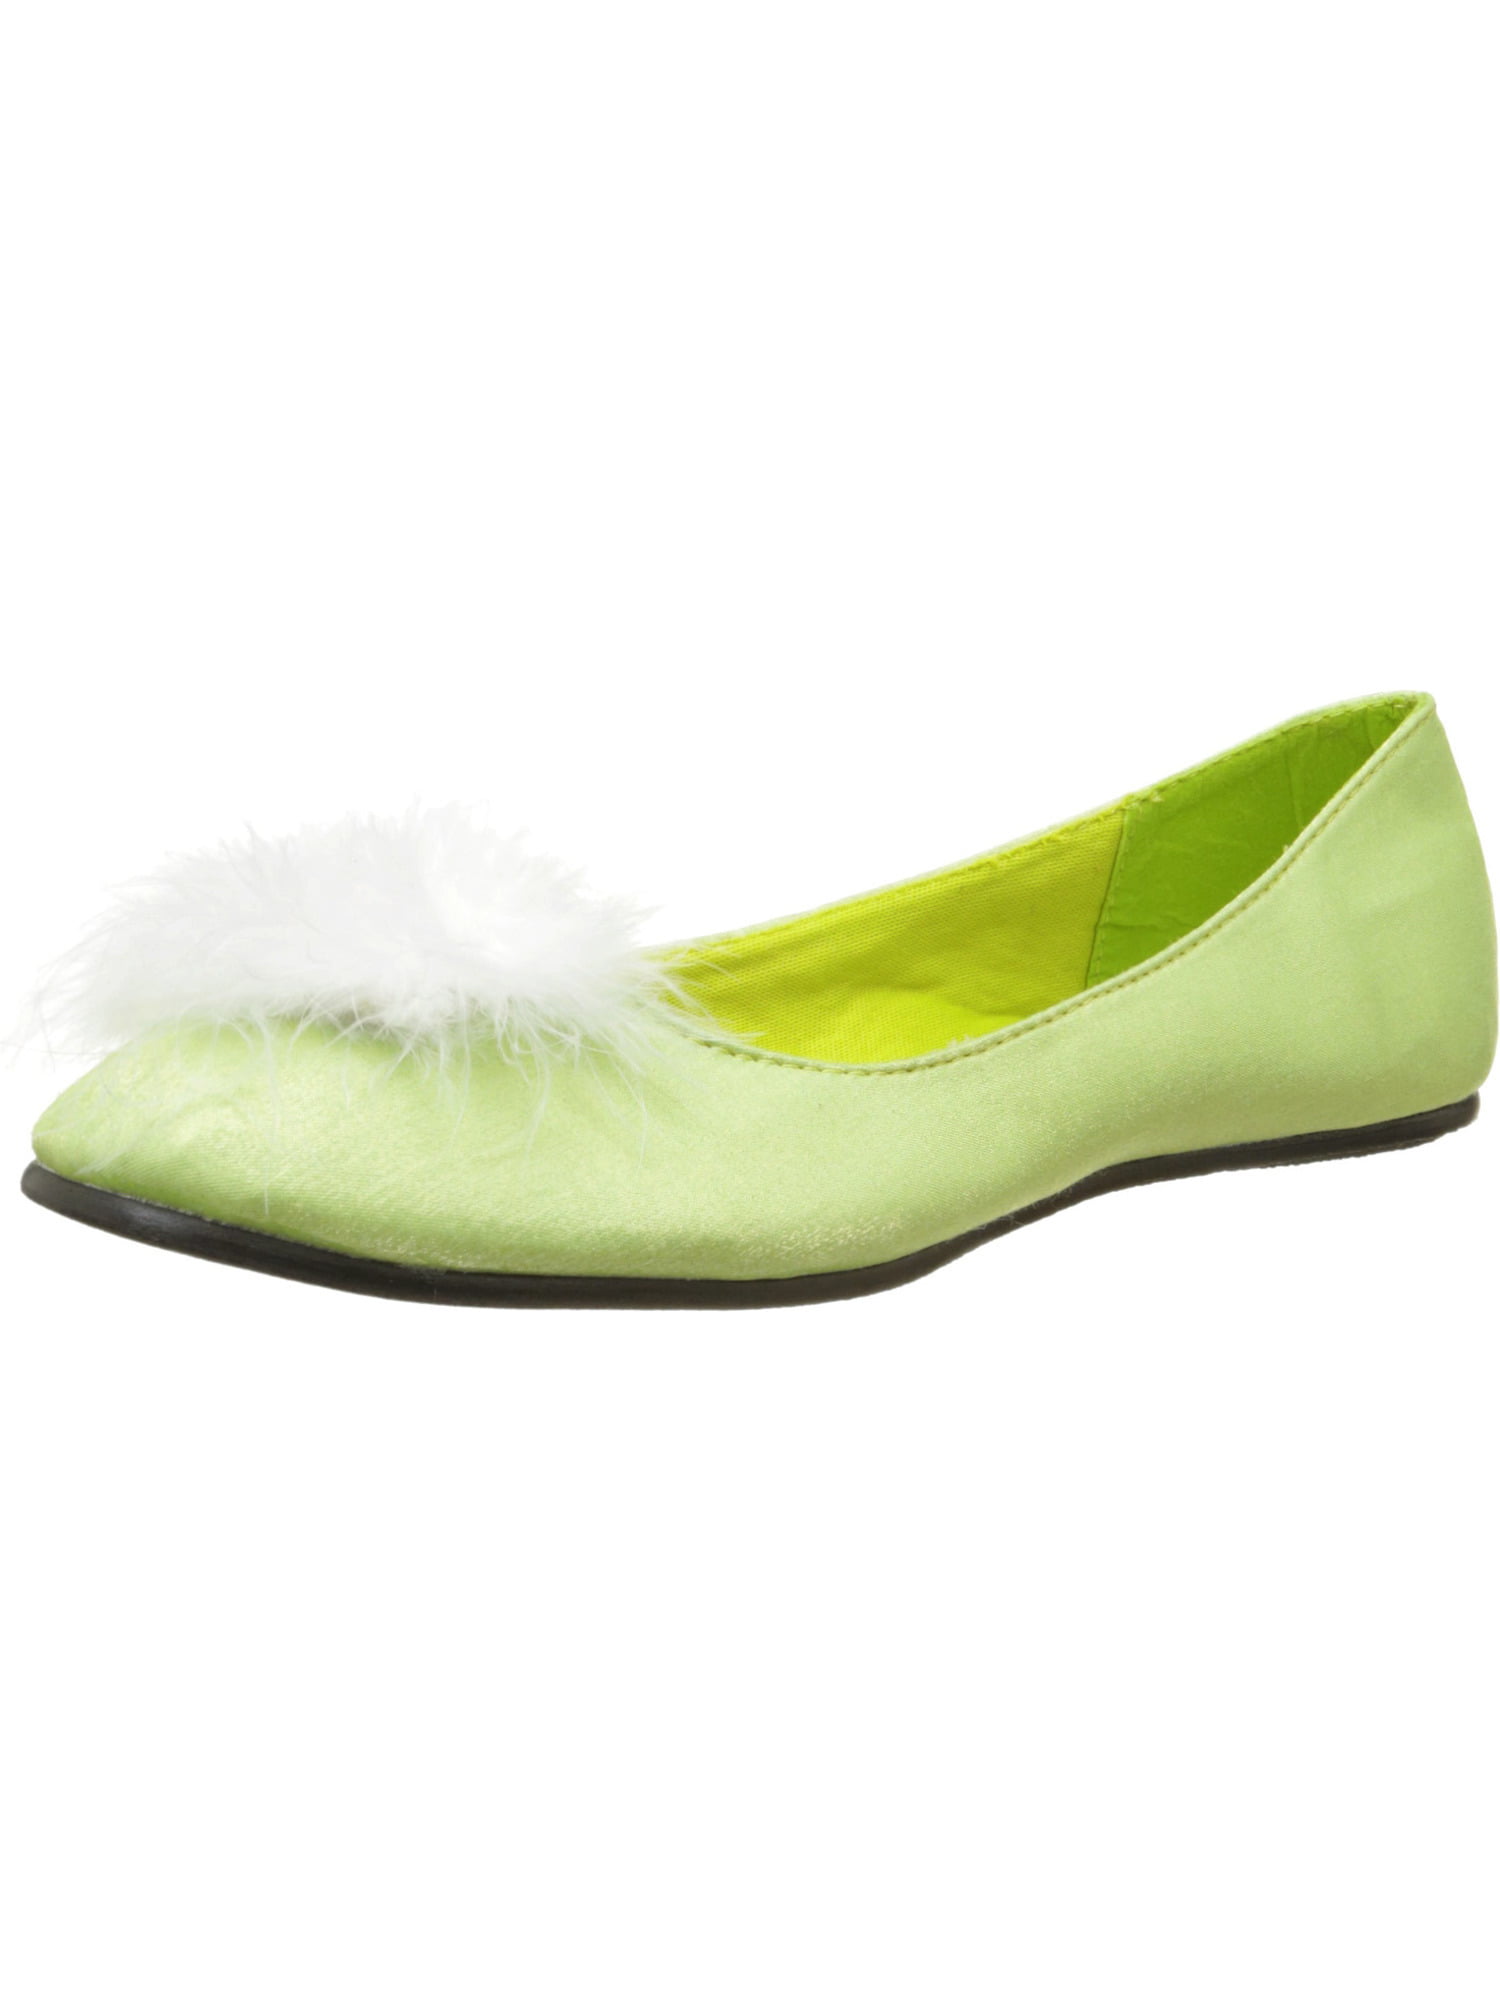 lime green flats women's shoes